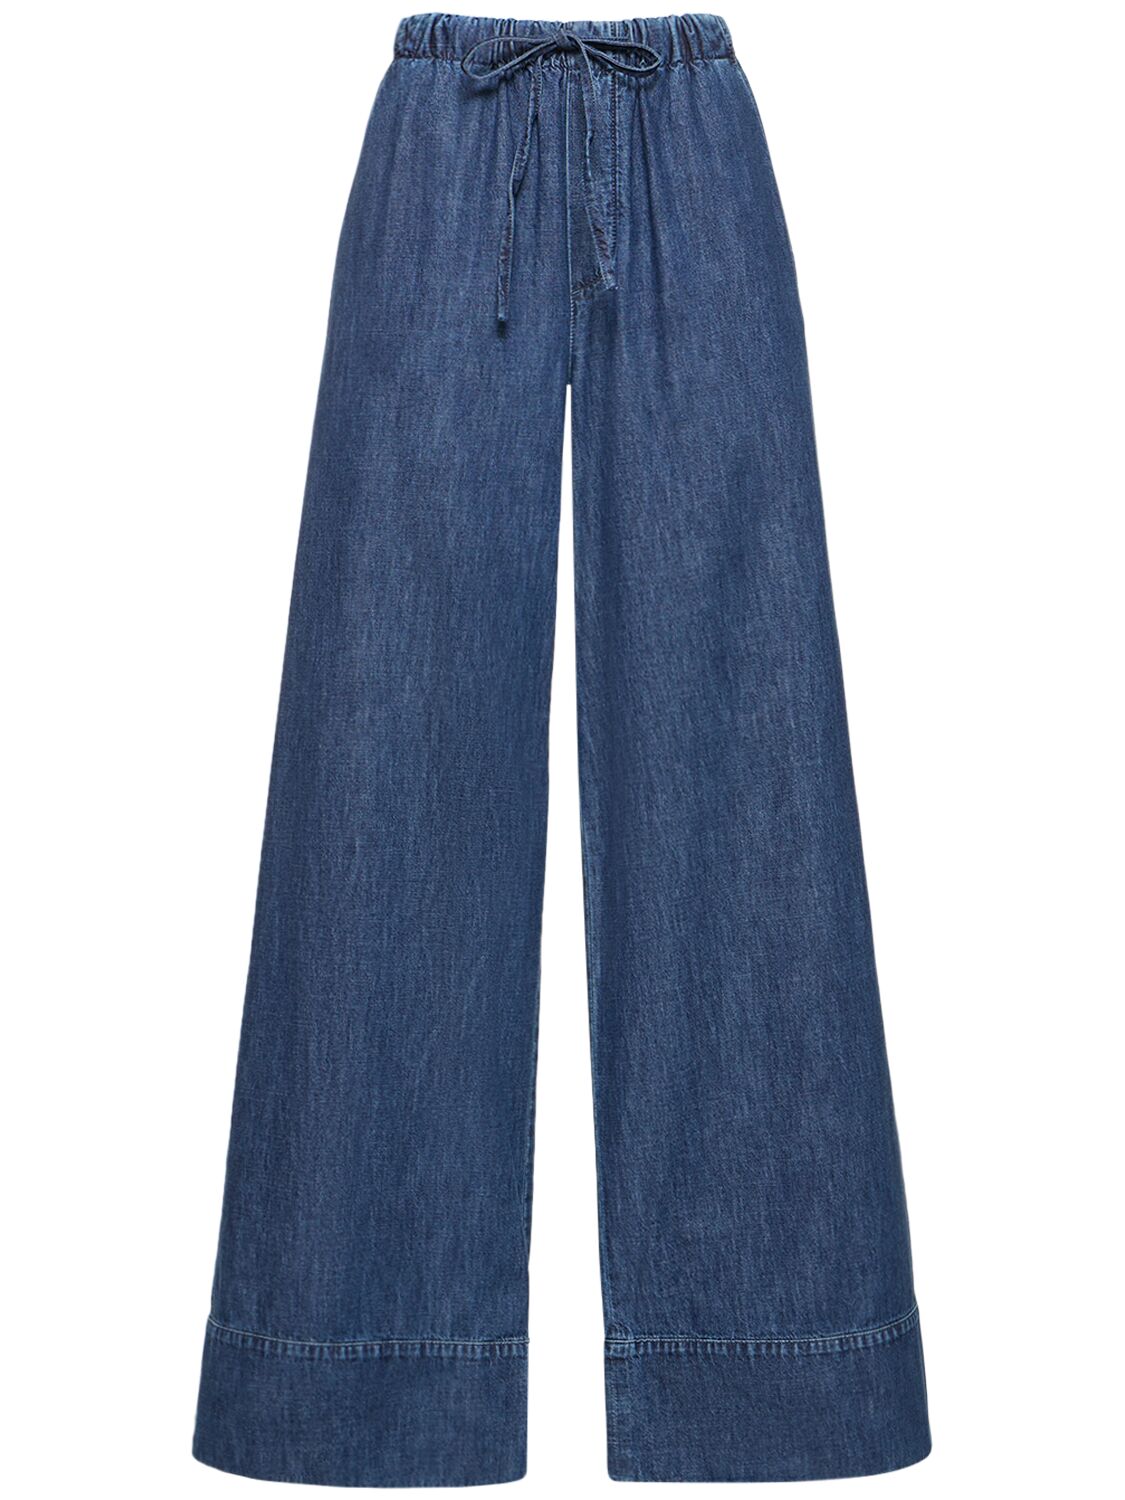 Chambray Denim High Waist Wide Jeans